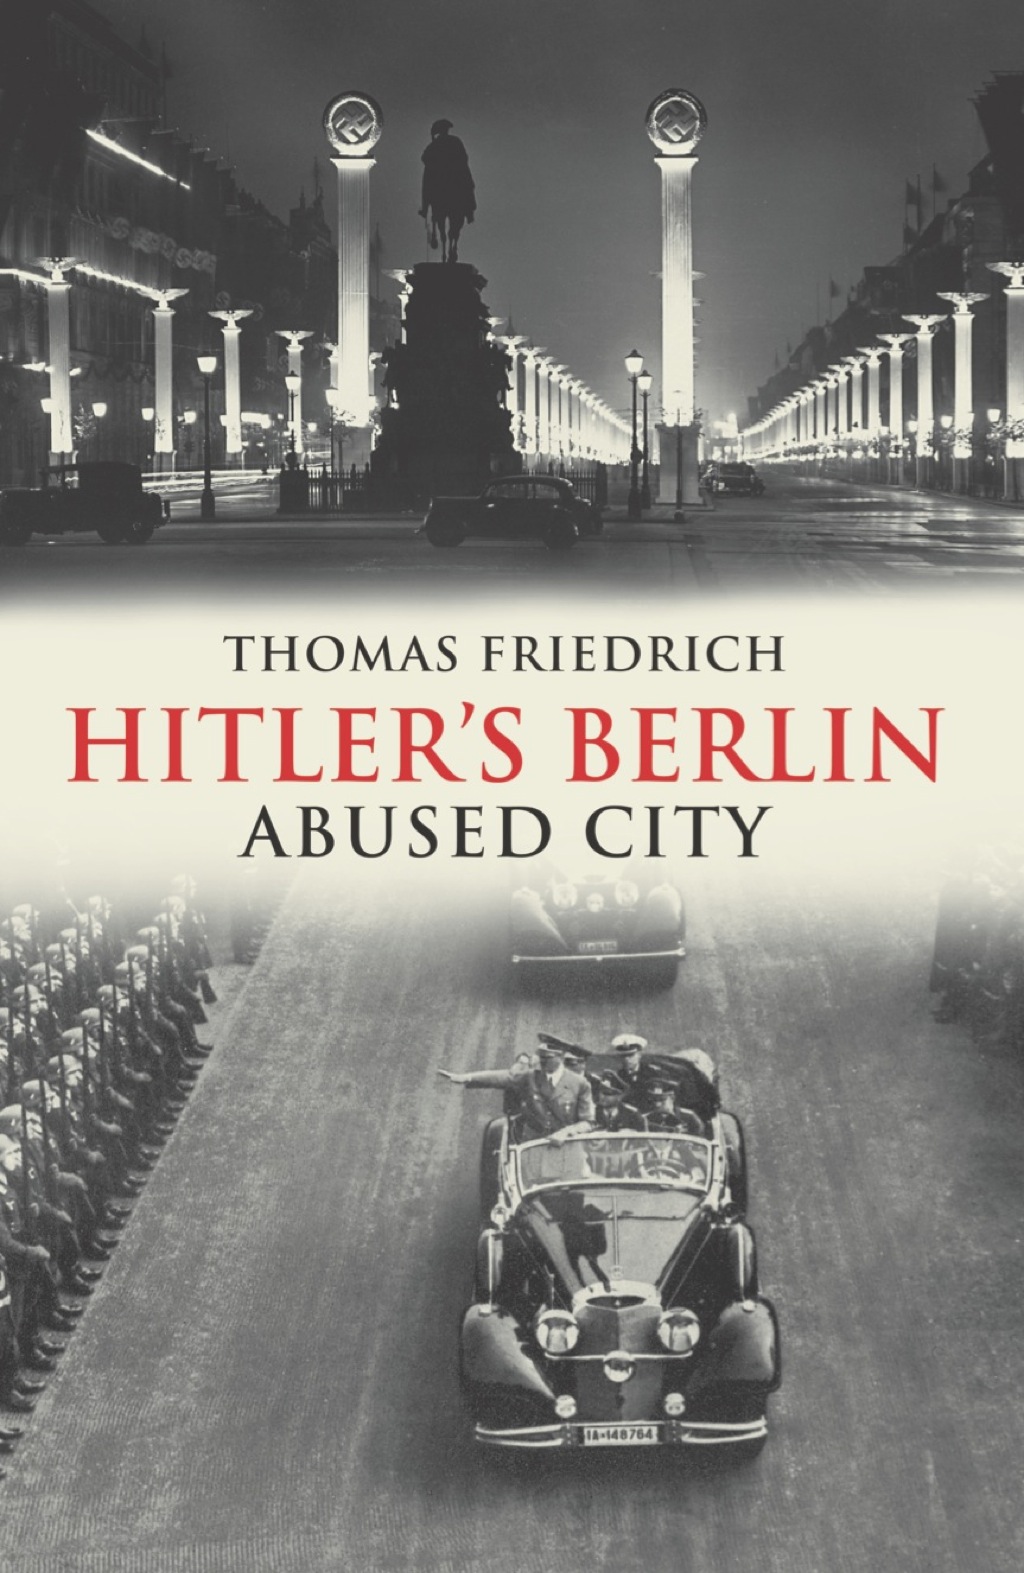 Hitler's Berlin: Abused City (eBook) - Thomas Friedrich,